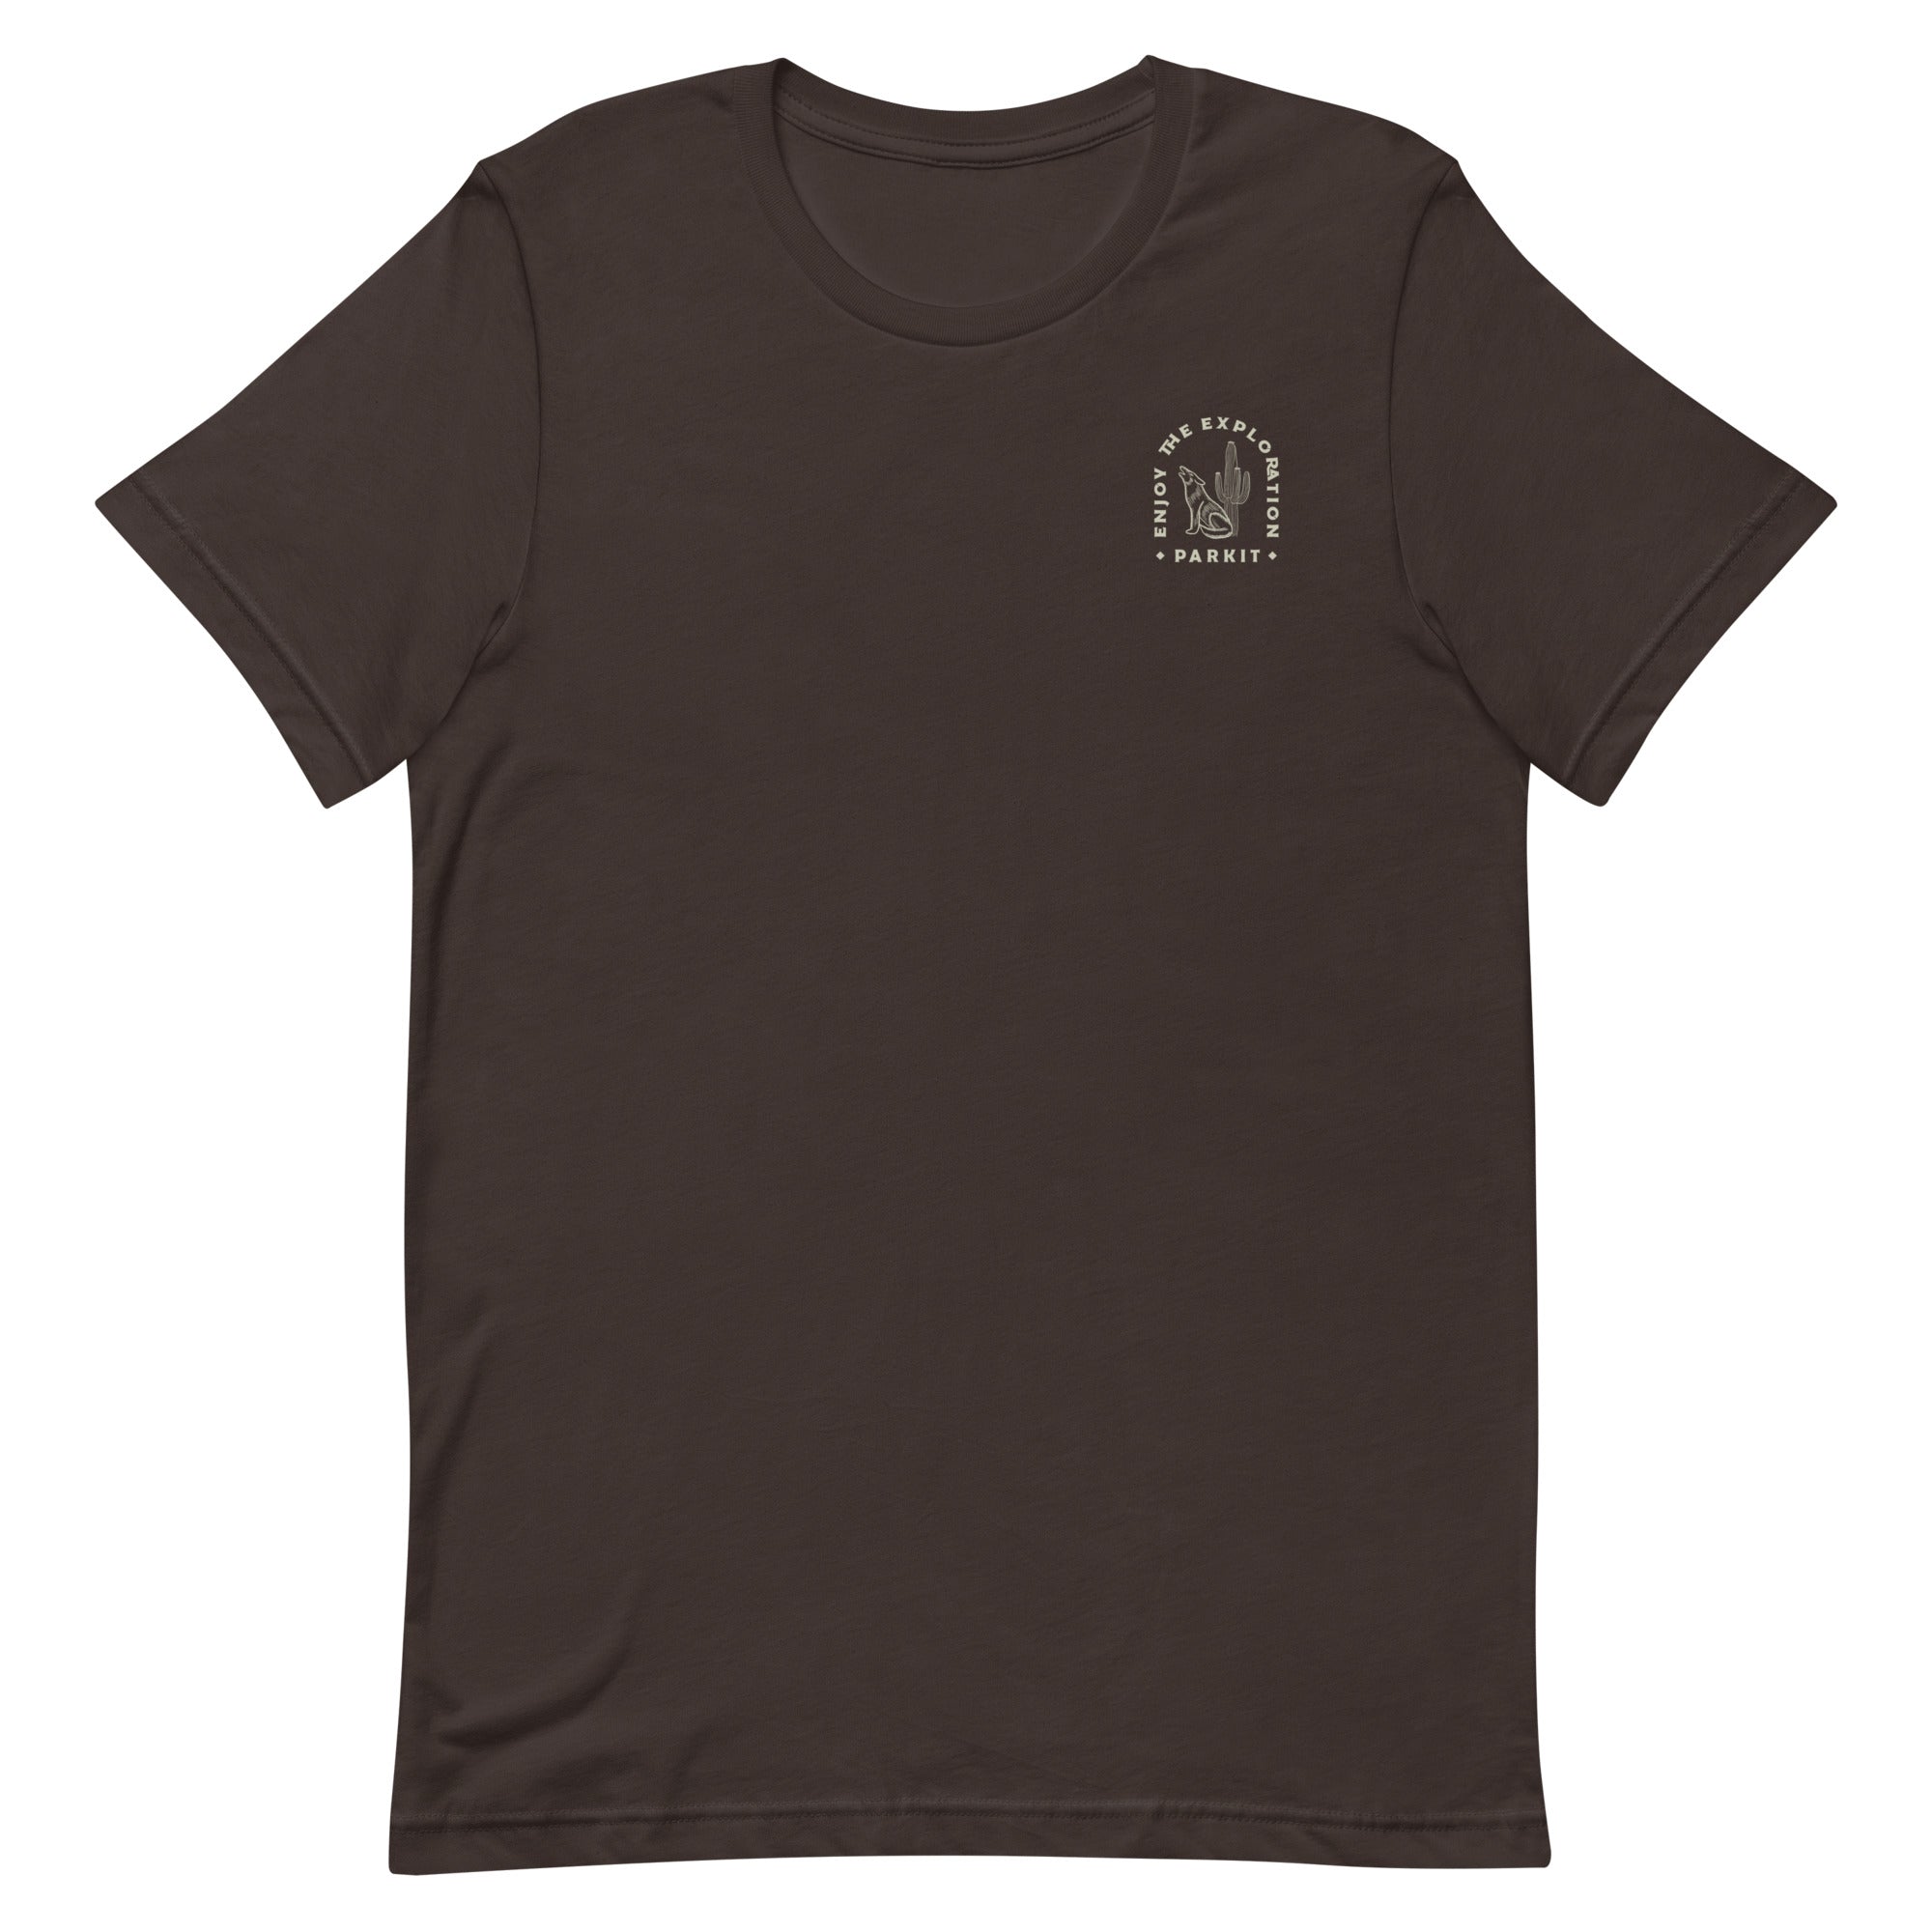 Coyote Unisex T-Shirt